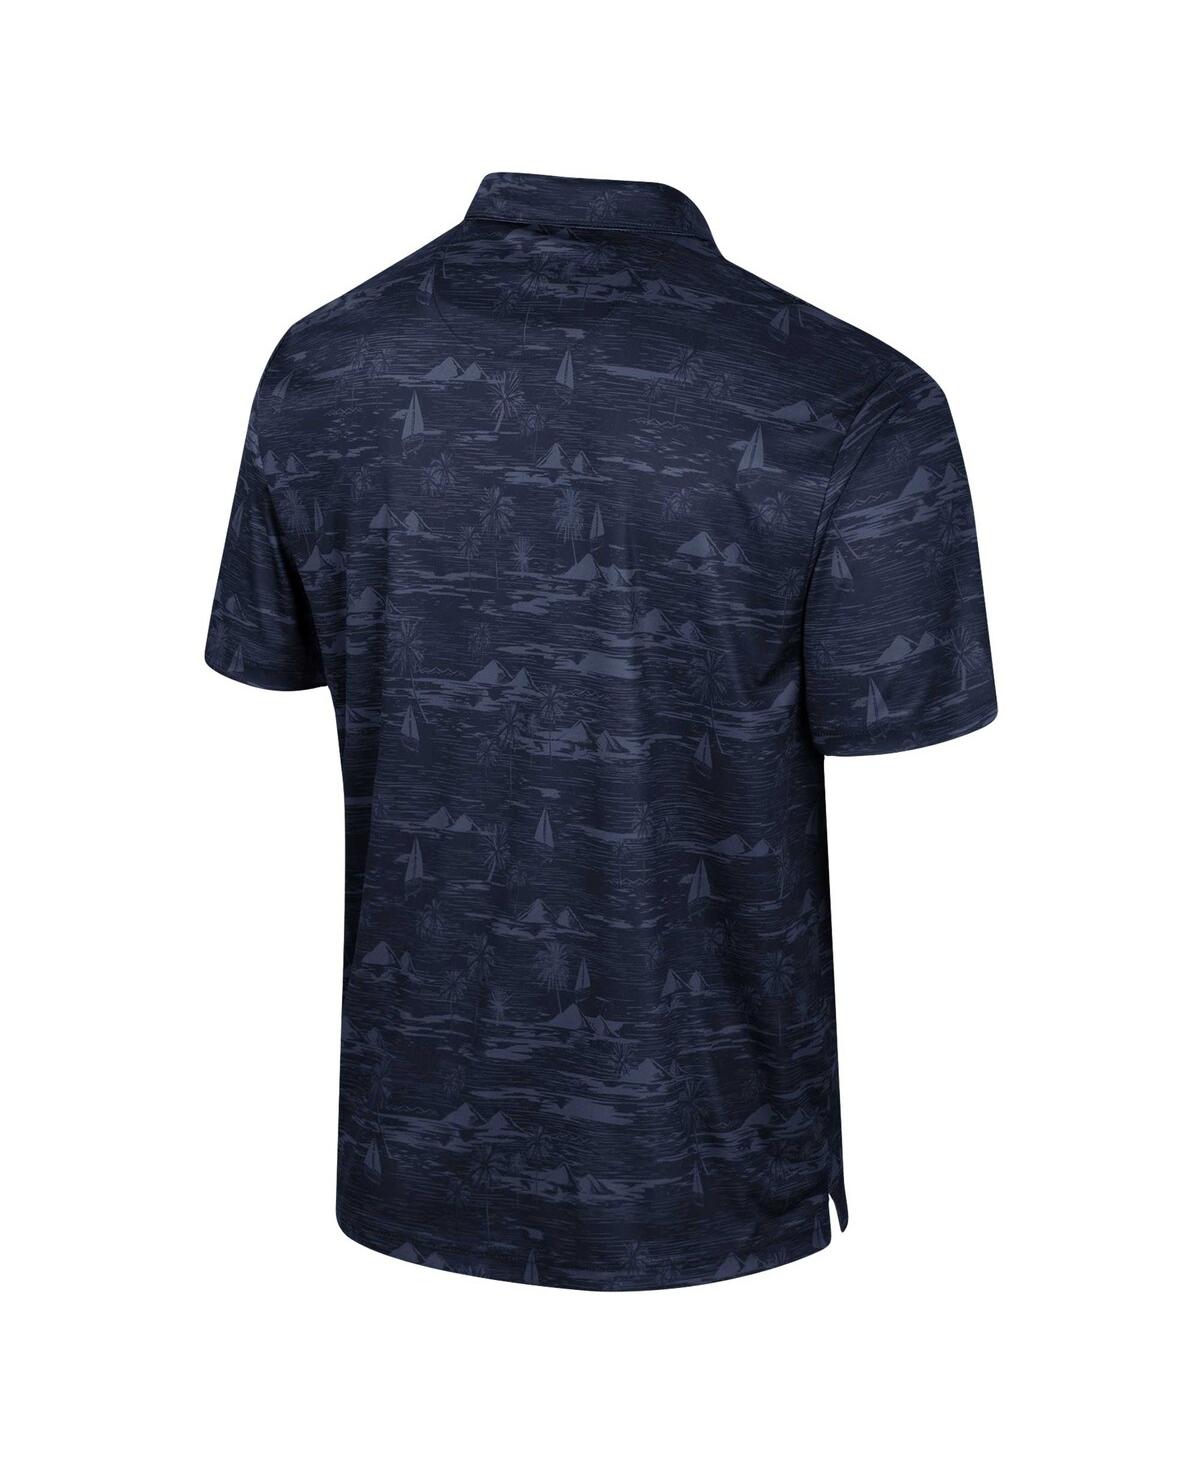 Shop Colosseum Men's  Navy Michigan Wolverines Daly Print Polo Shirt